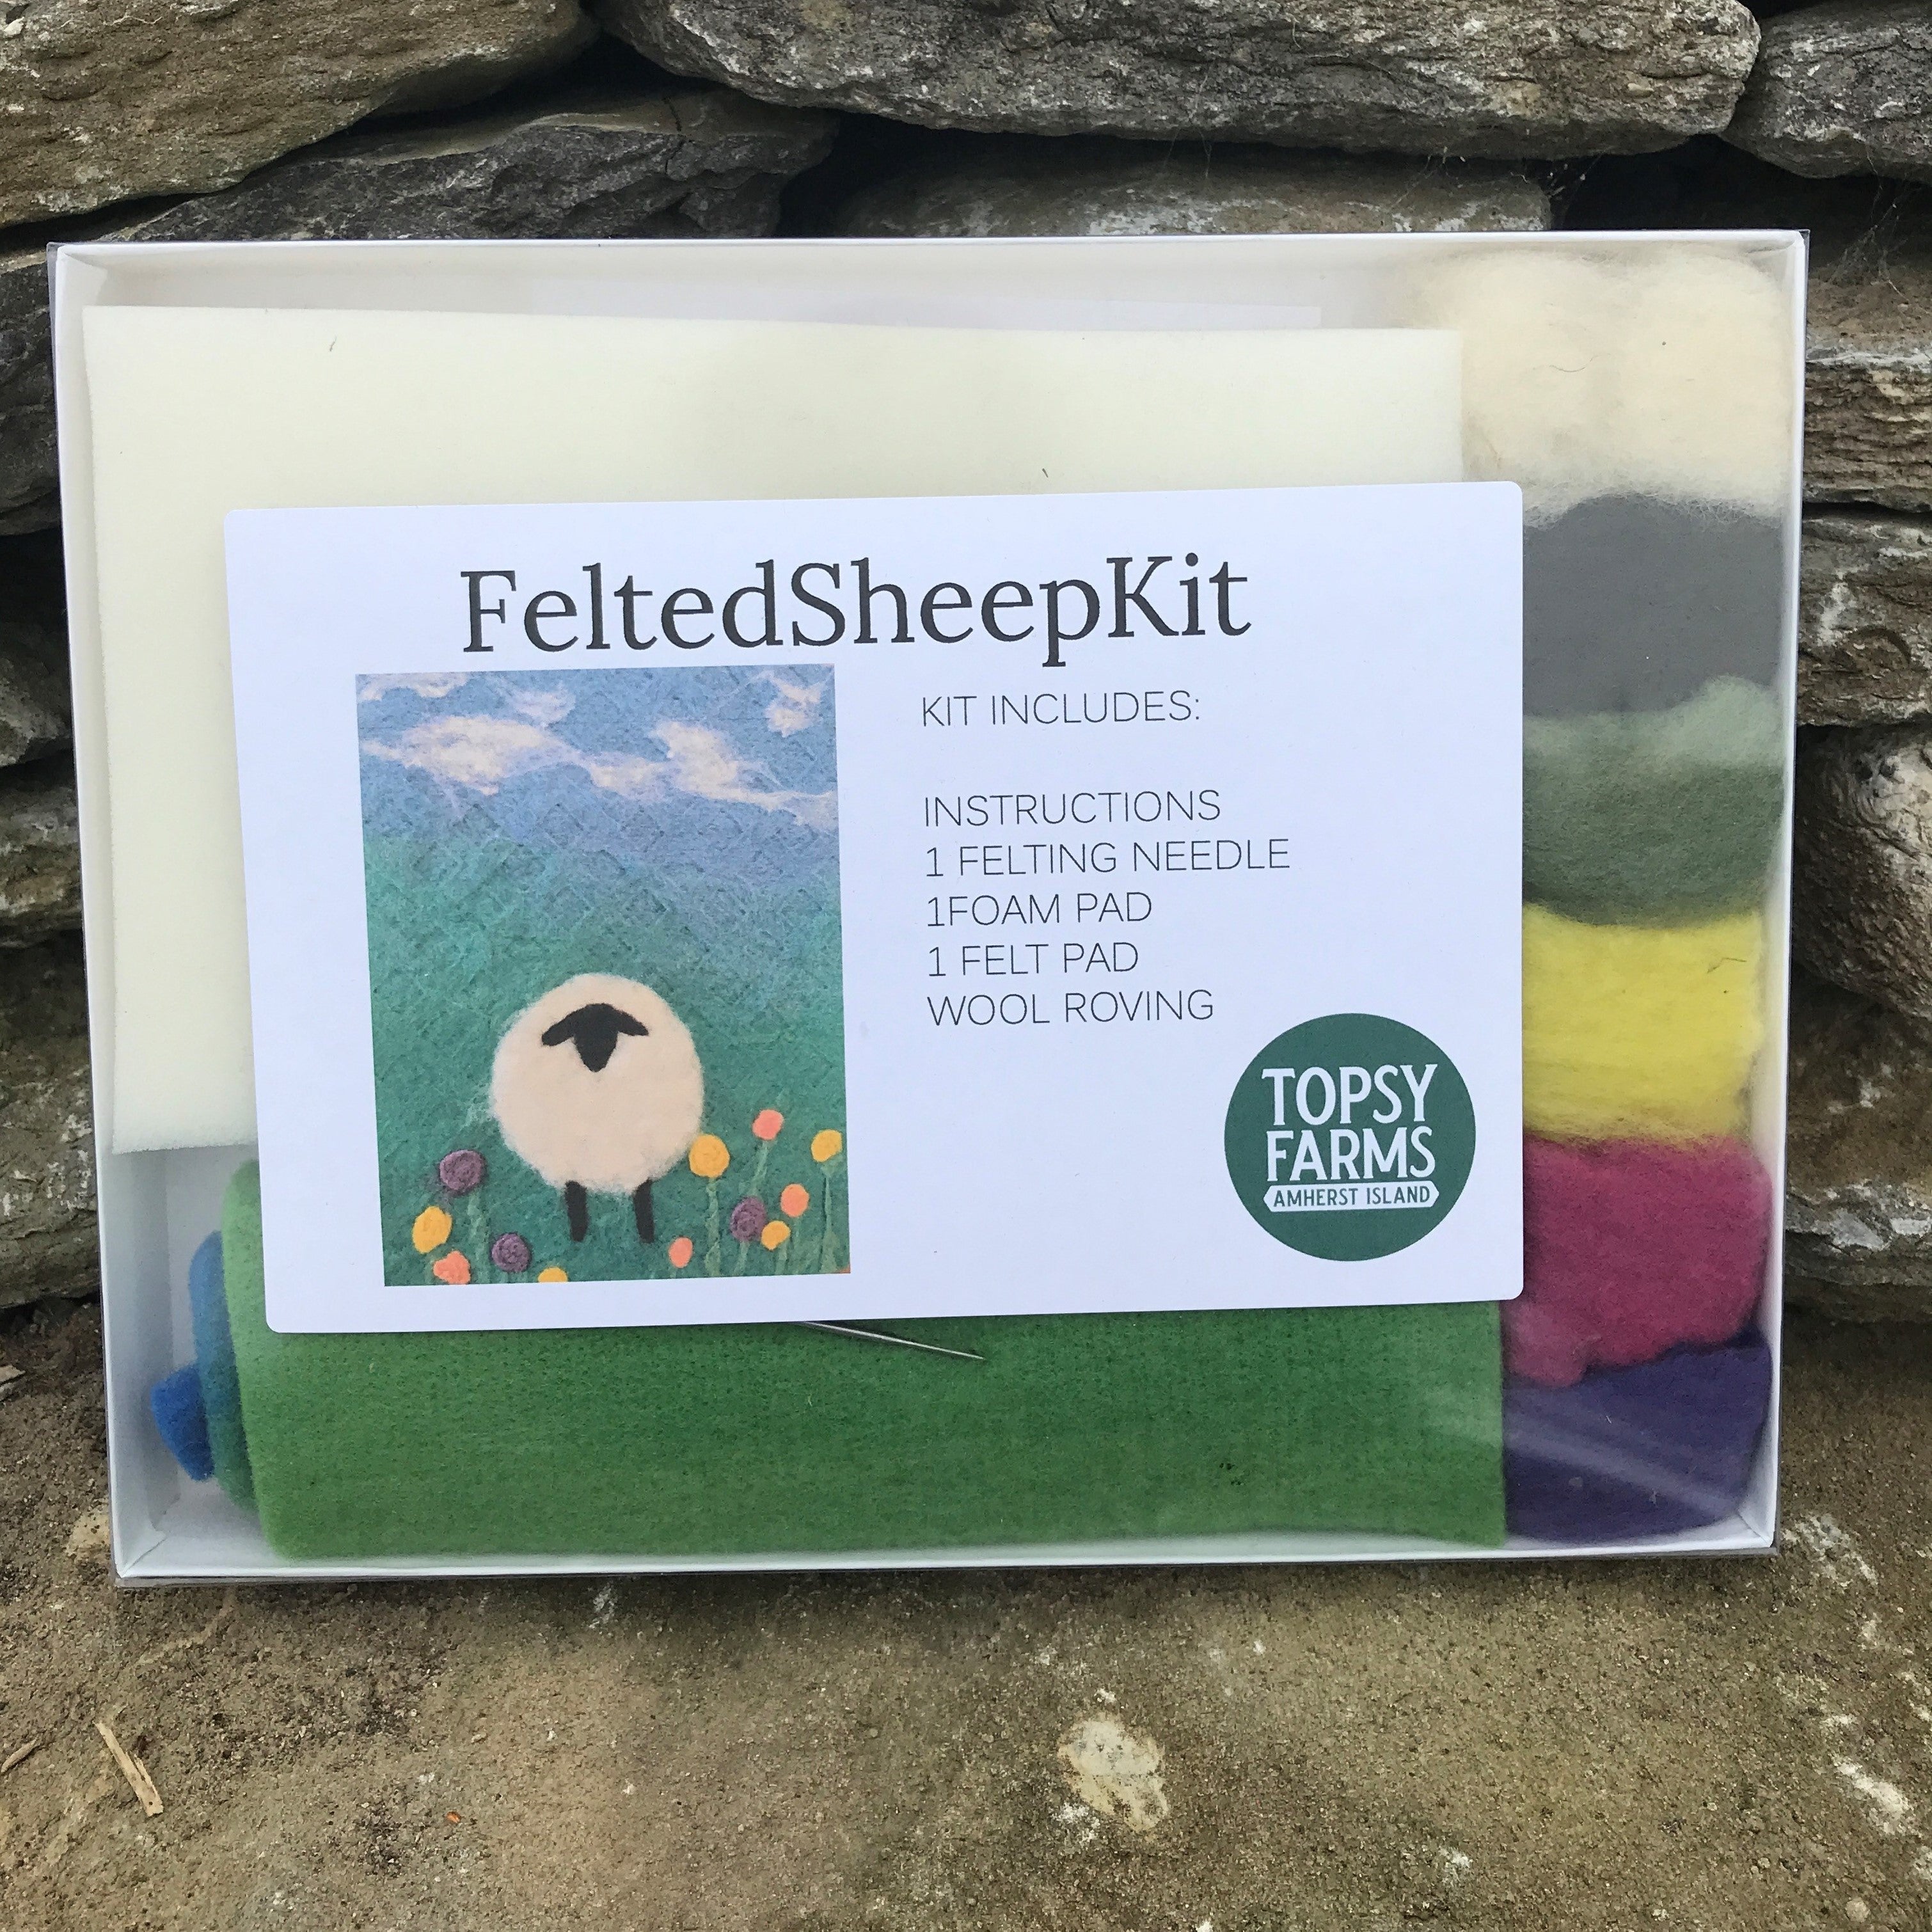 Topsy Farms' sheep felting kit